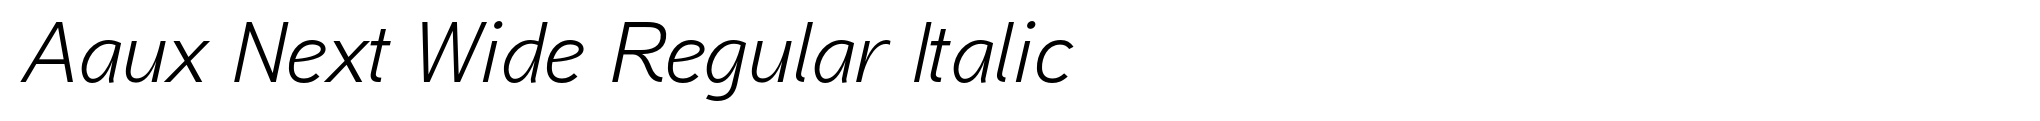 Aaux Next Wide Regular Italic image